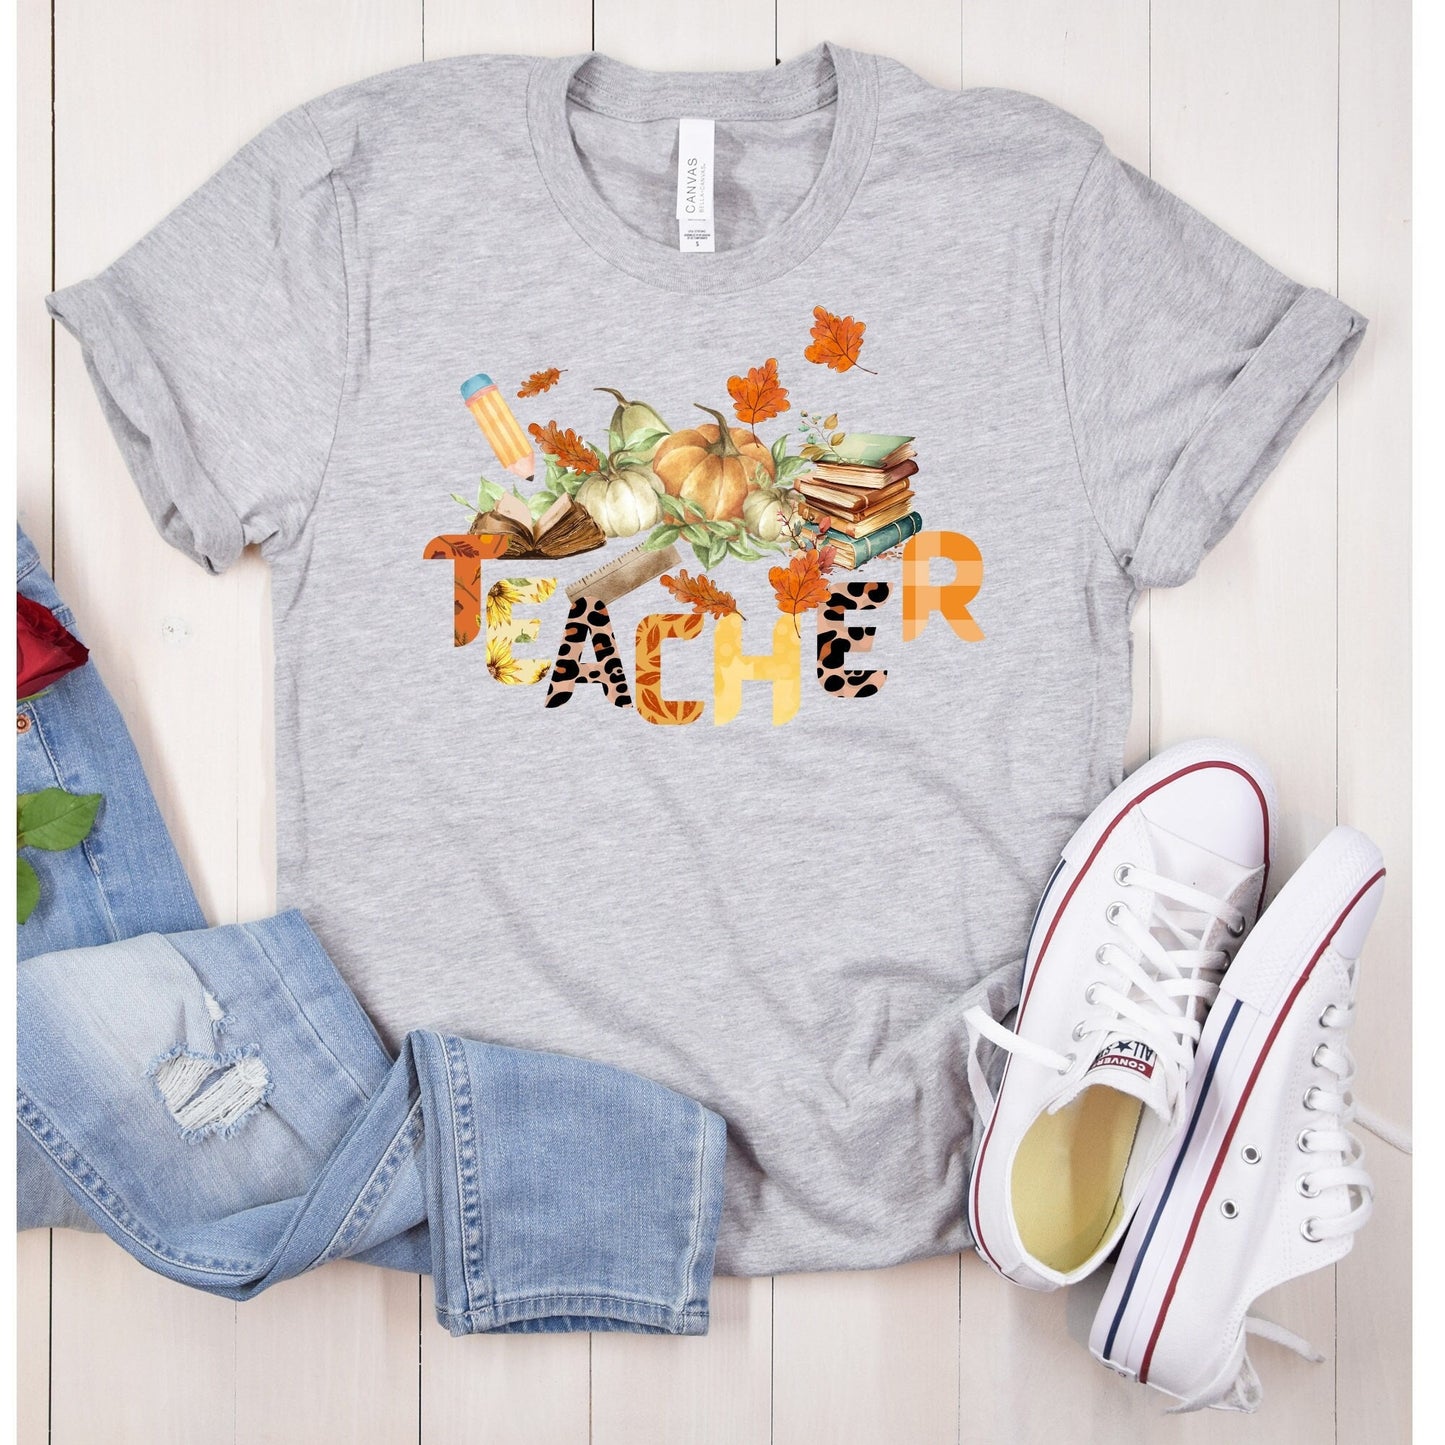 Autumn Graphic T-Shirt, Fall Teacher Pumpkin Tee, Gift for Teacher, Education Quote Shirt, Fun and Unique Tshirt, Loose Fit Shirt